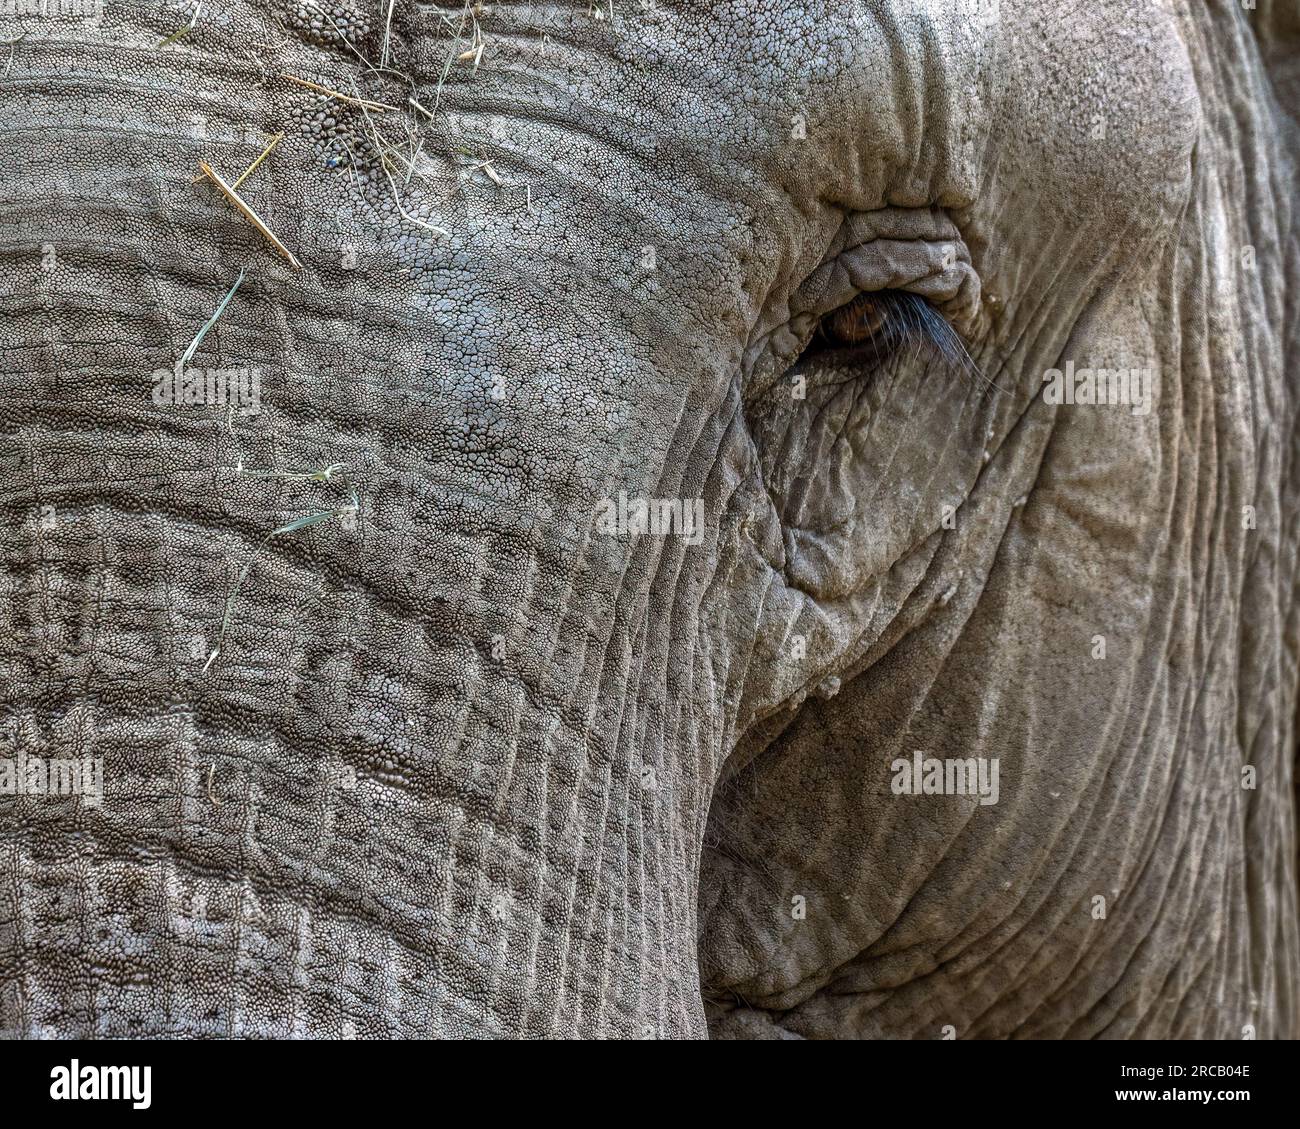 Elephant eye Stock Photo